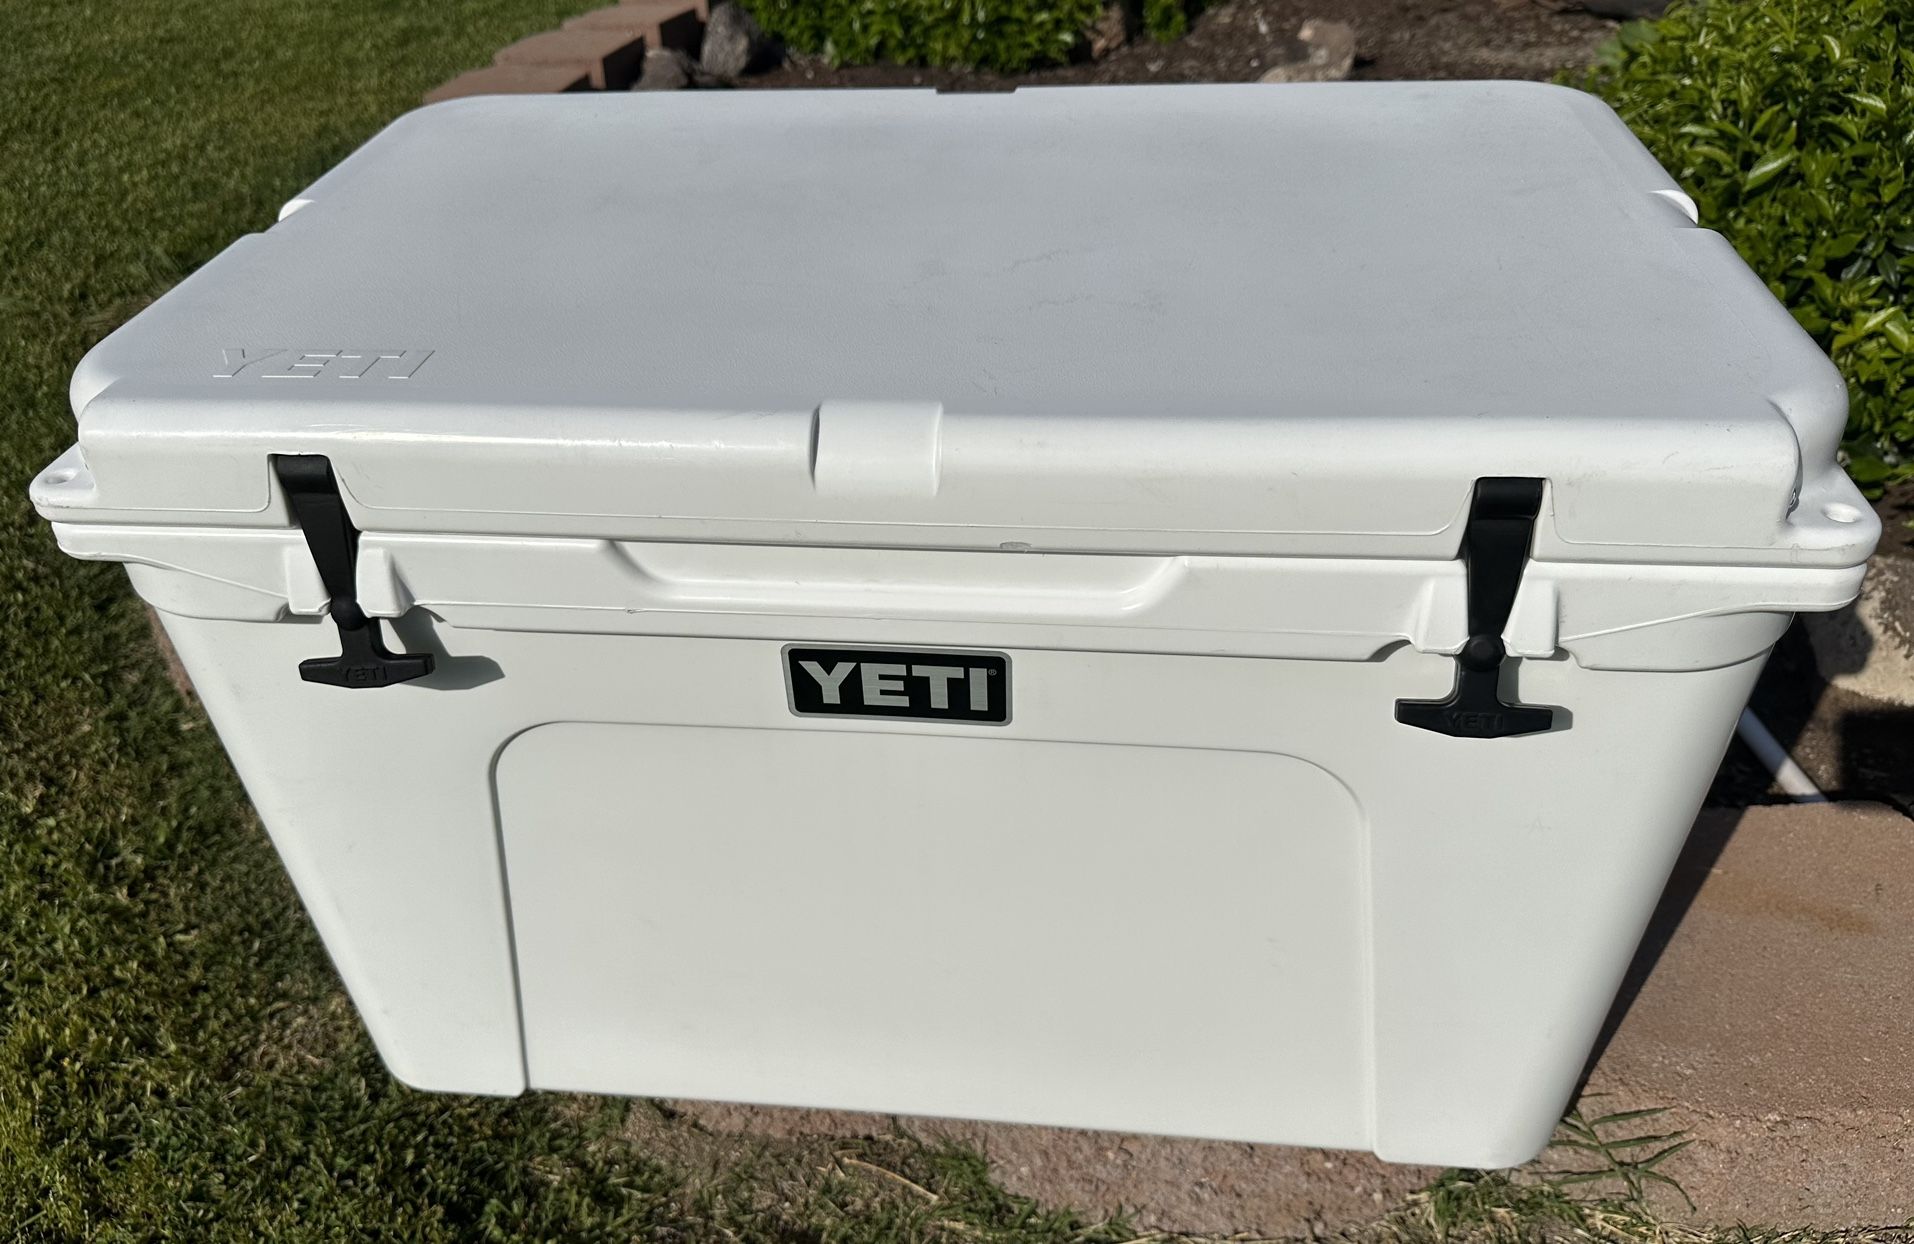 YETI Tundra Hard Shell Cooler, Ice Chest, Ice Box